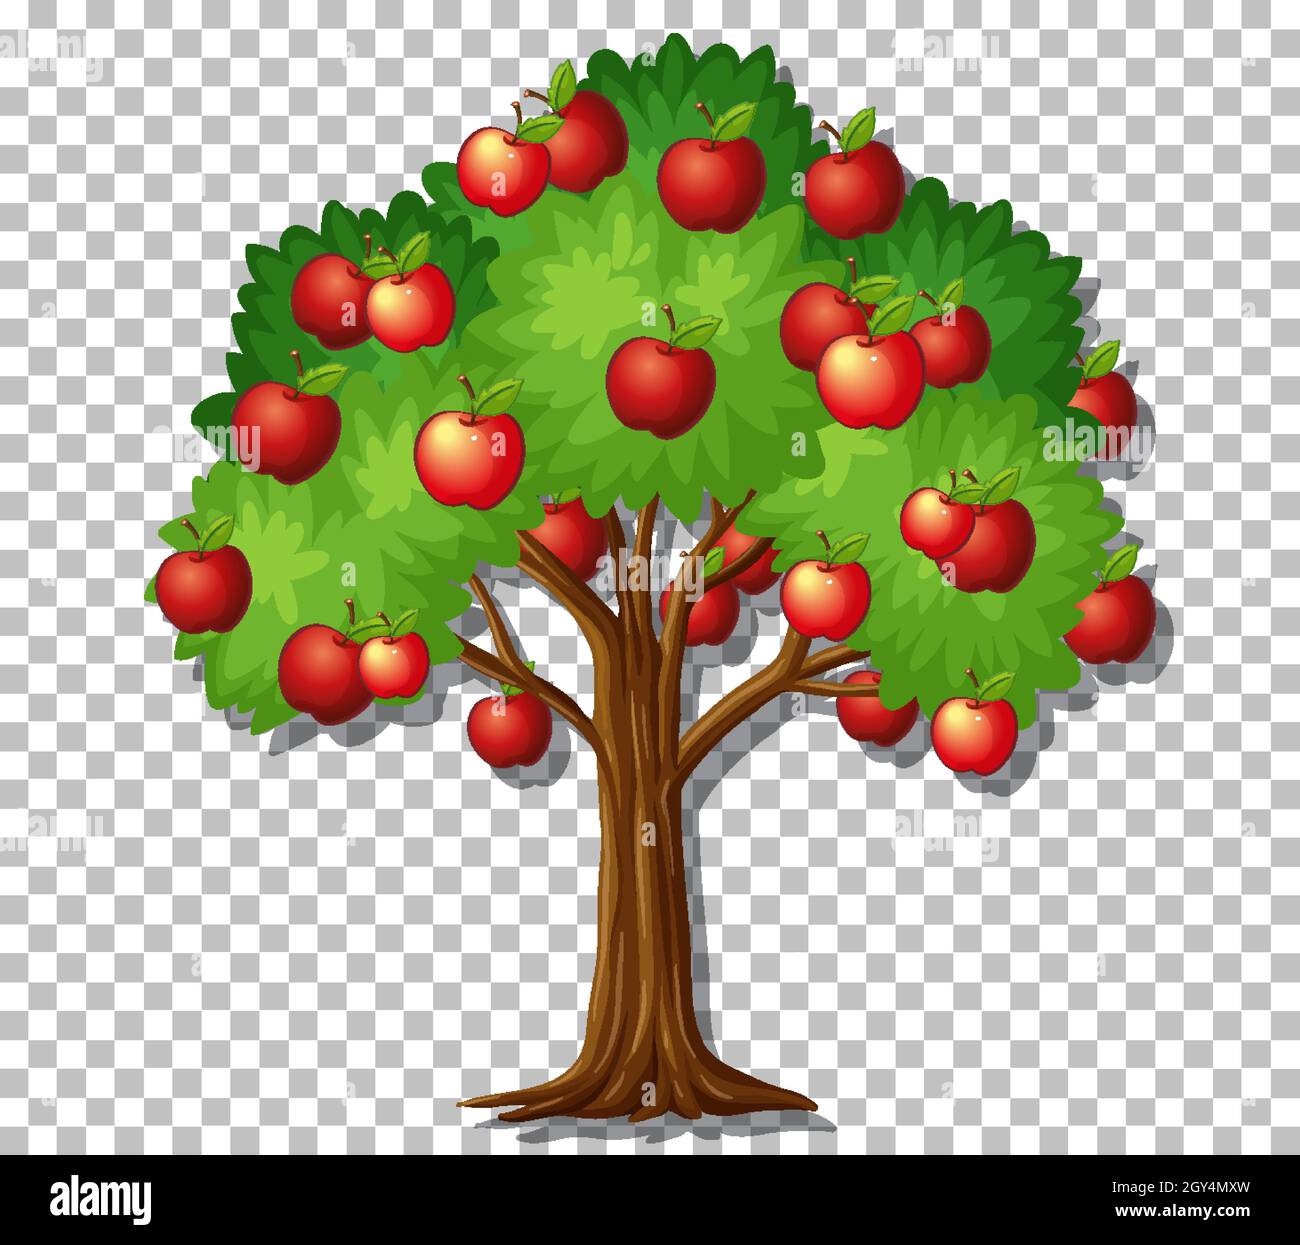 Apple tree on transparent background illustration Stock Vector Image & Art  - Alamy